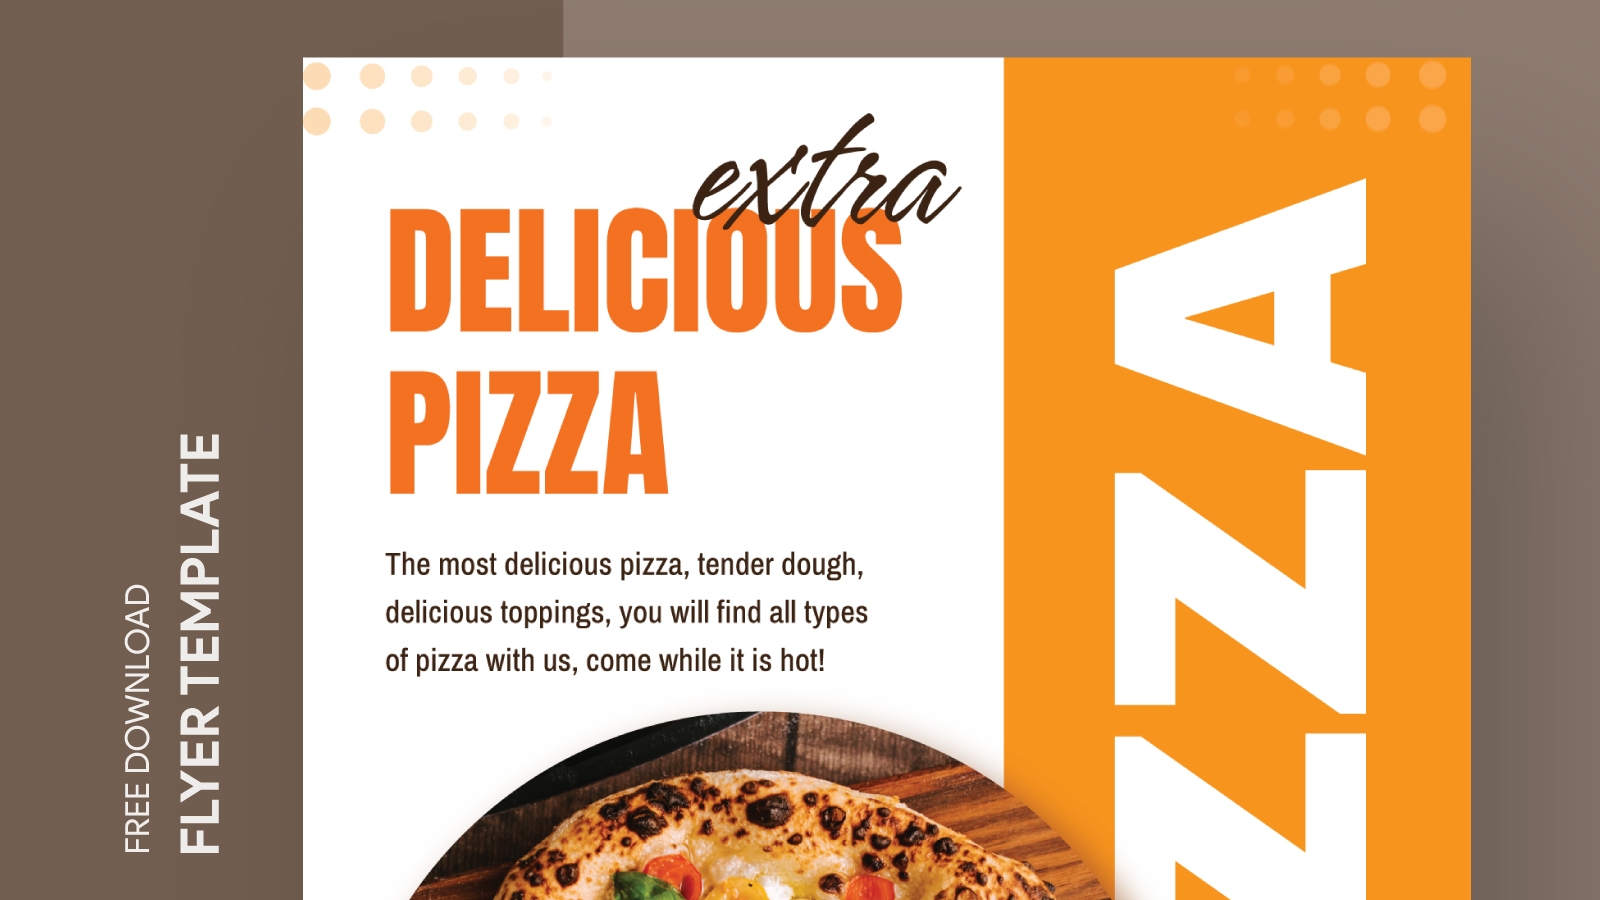 Pizza Restaurant Flyer Free Google Docs Template gdoc io